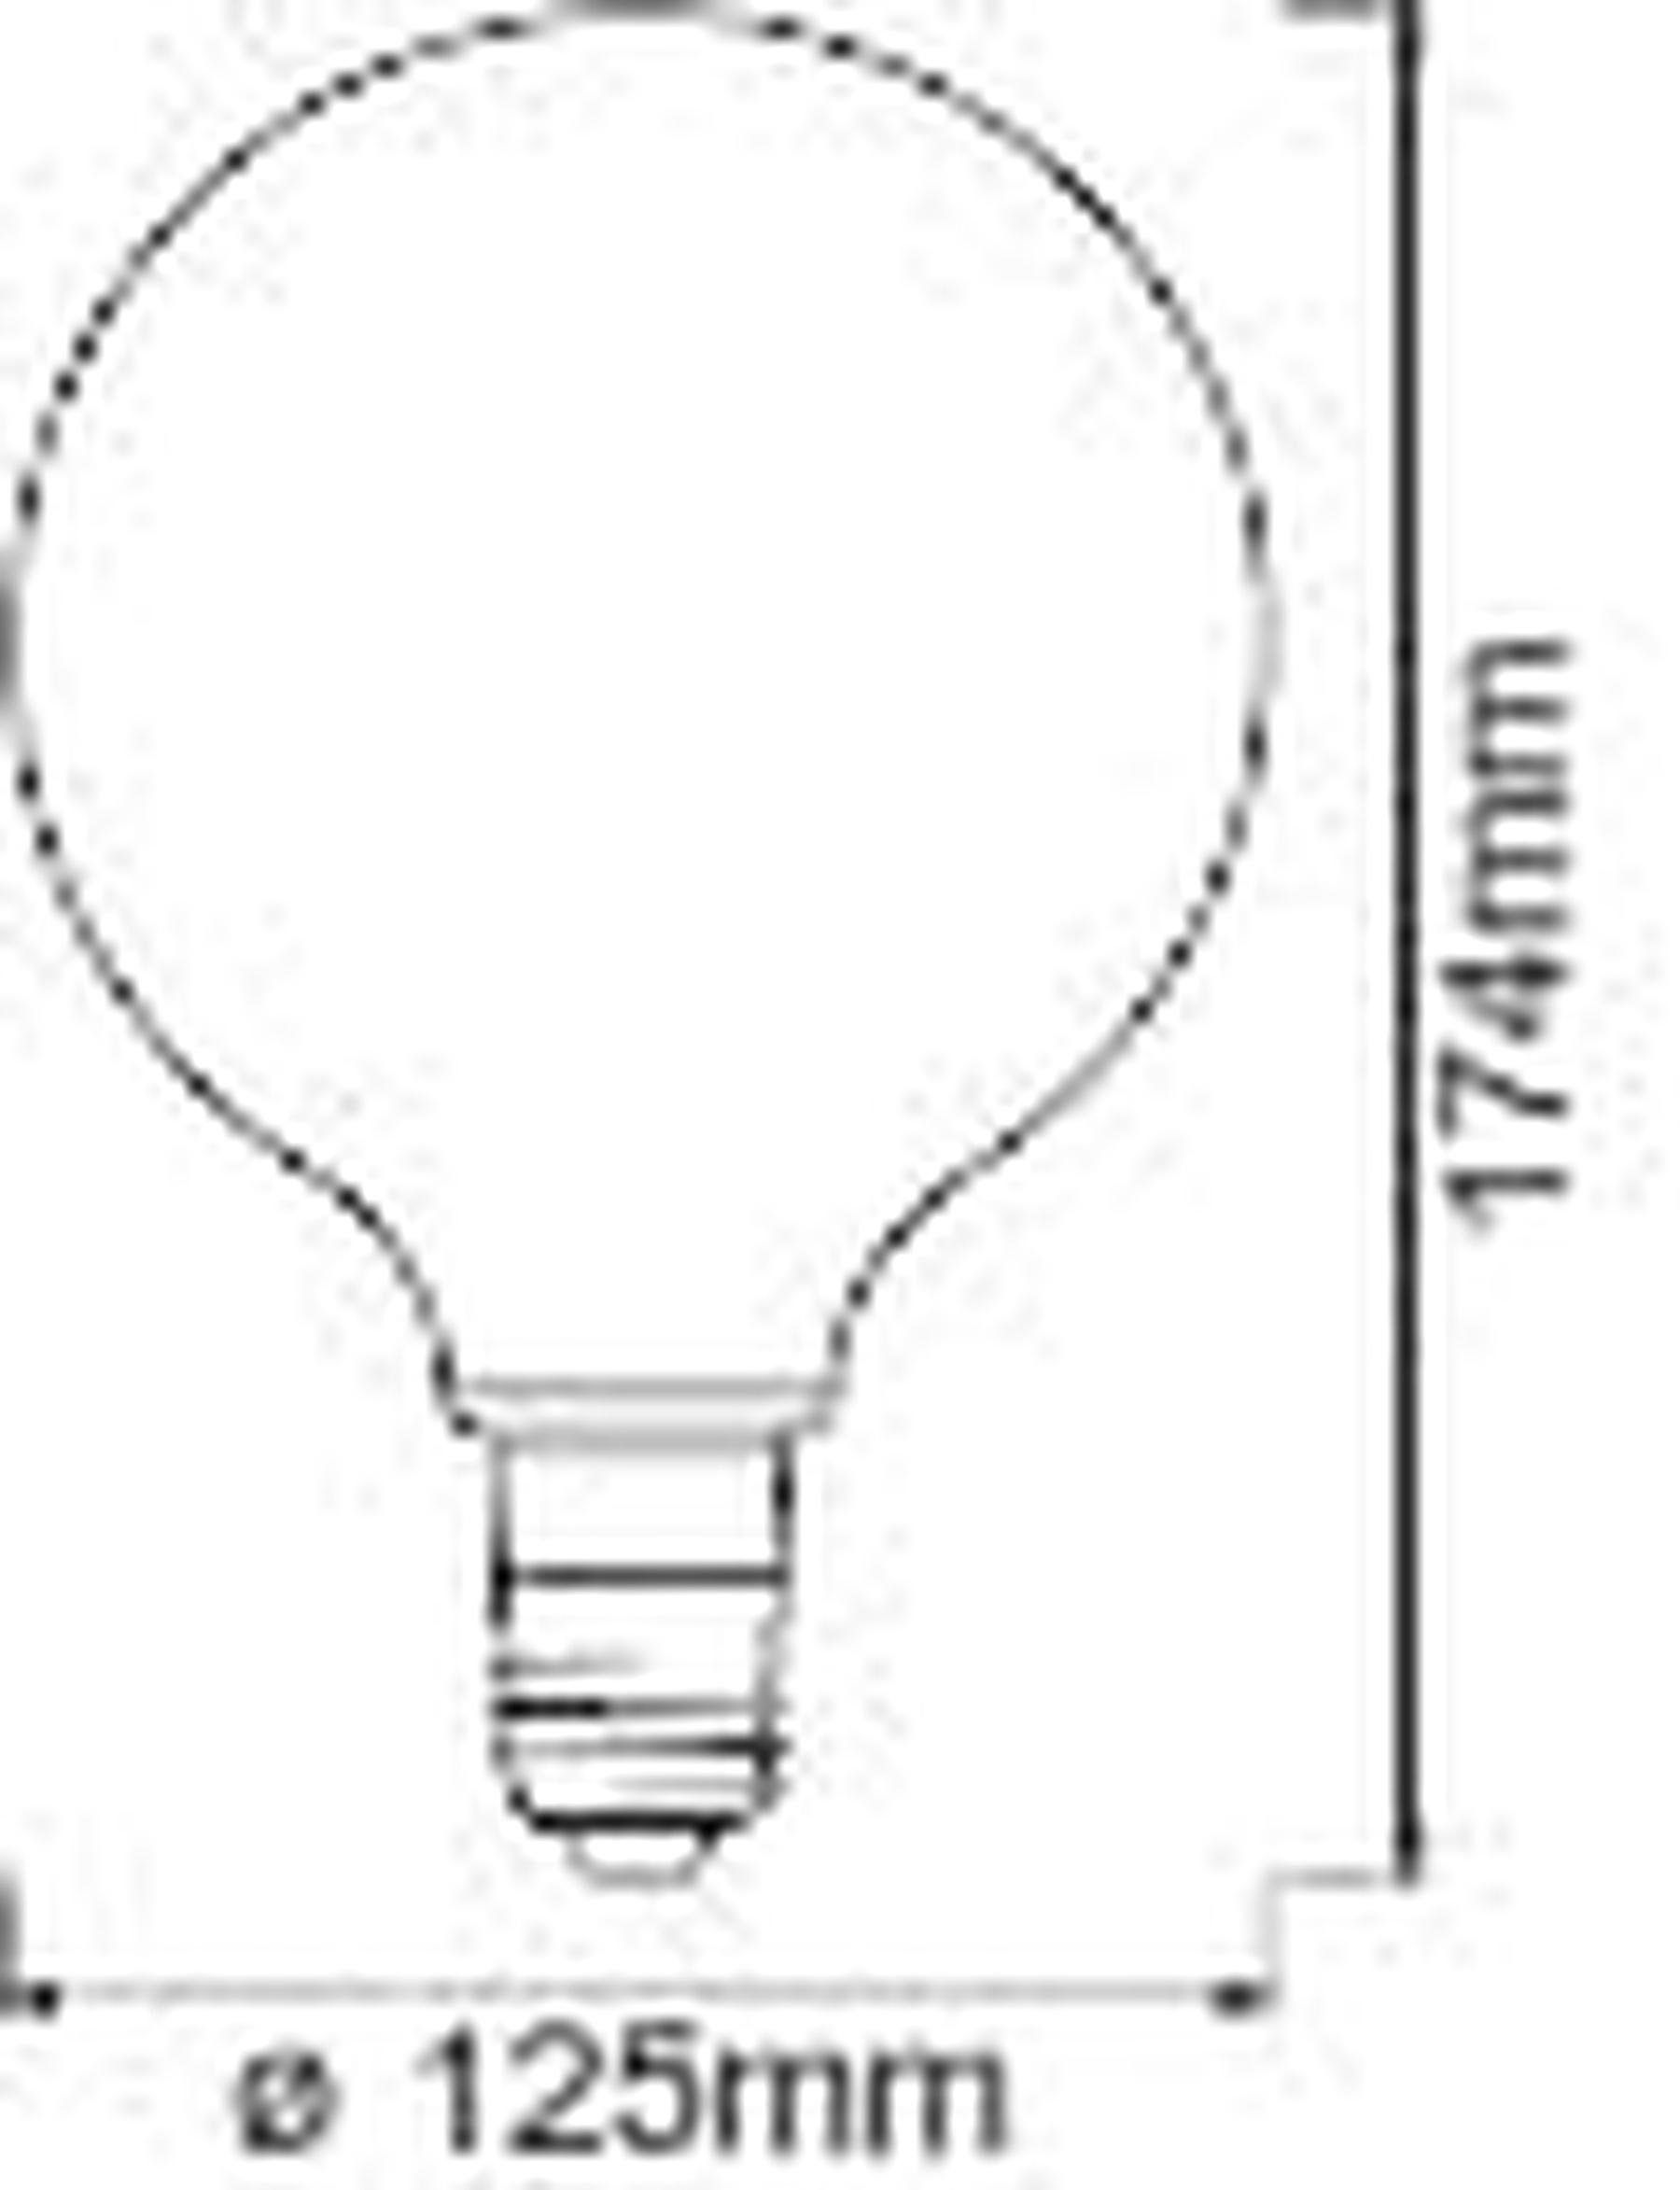 Ledvance LED-Leuchtmittel Globeform Goldglas E27 Lampe E27, Energiesparend, App-Steuerung Warmweiß, große Dimmbar, Glühbirne dimmbar LED Smart